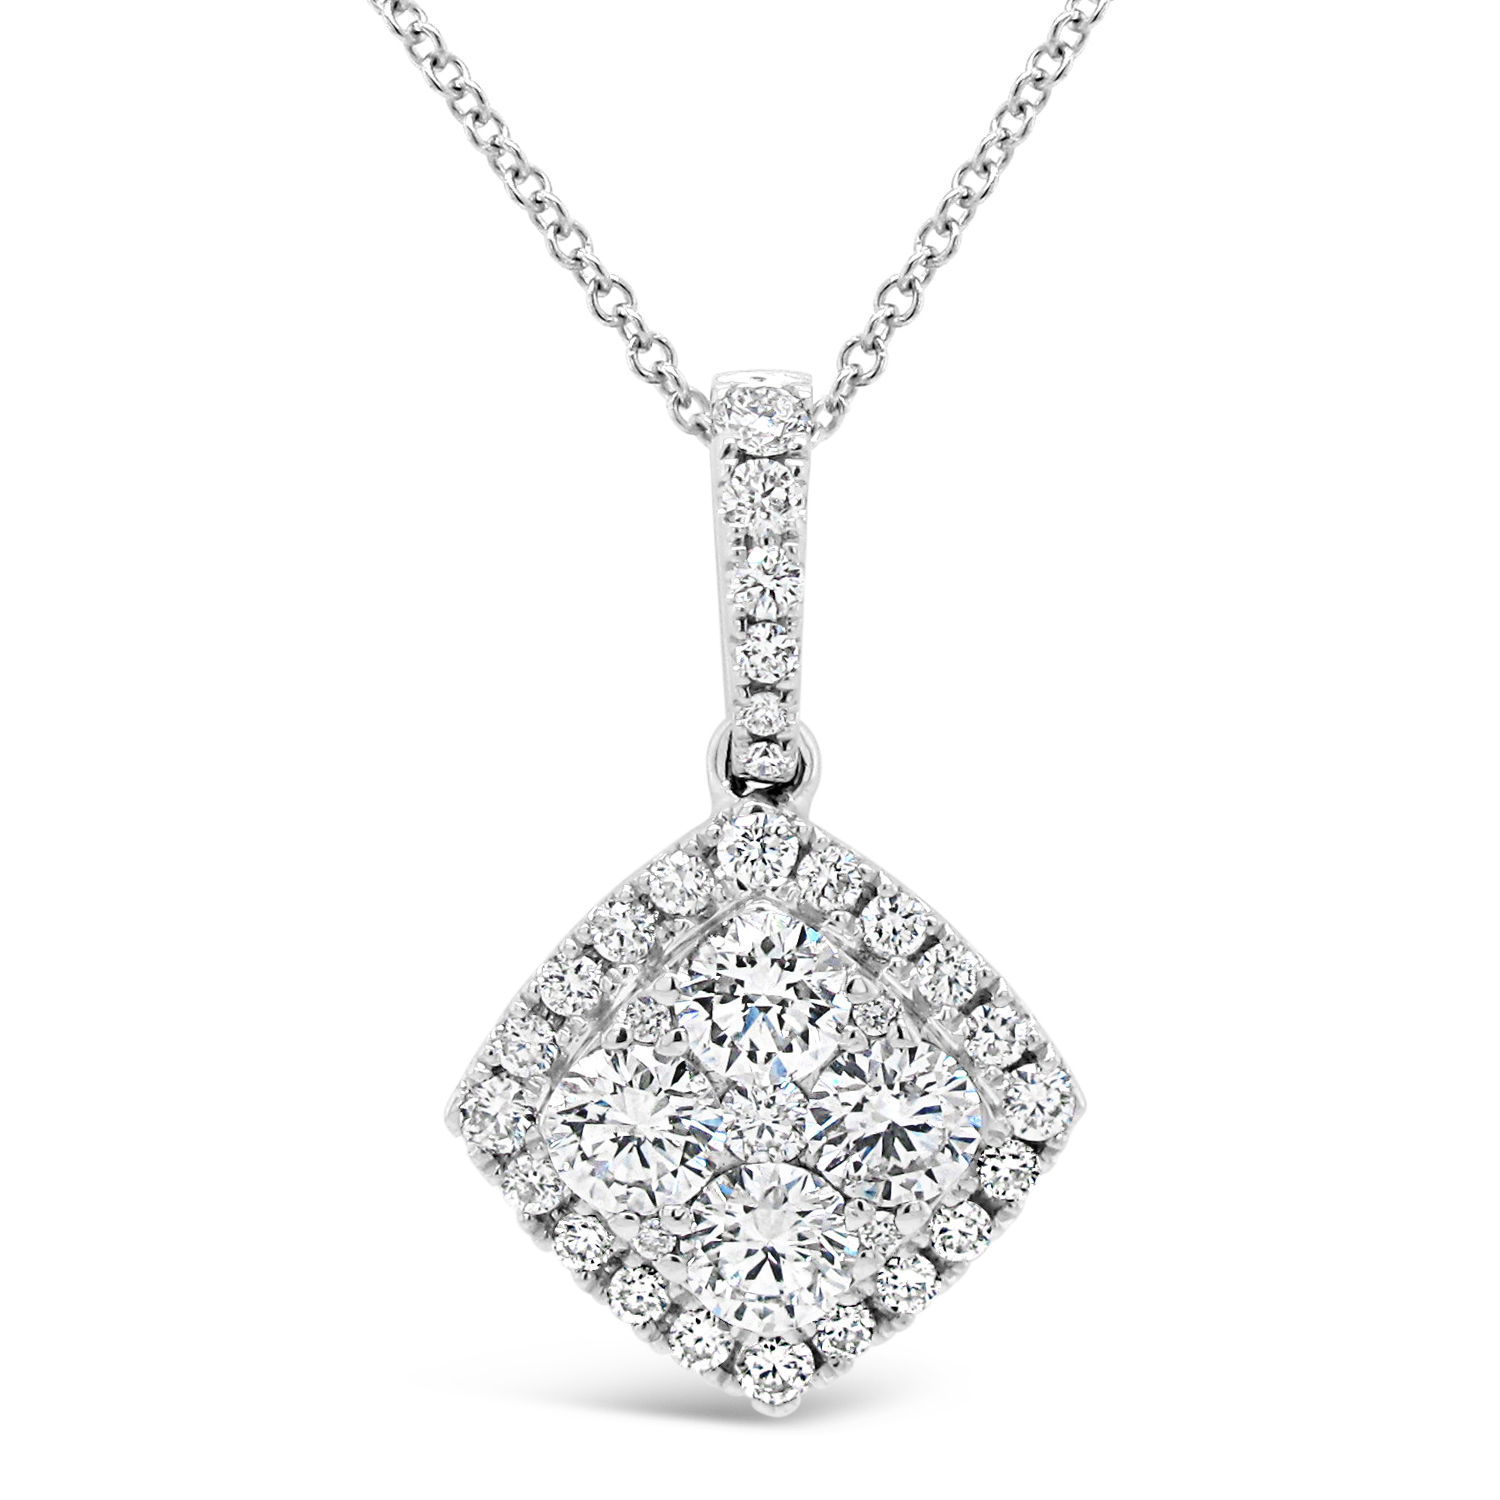 18k White Gold 7/8ct TDW White Diamond Square Shape Pendant Necklace | eBay